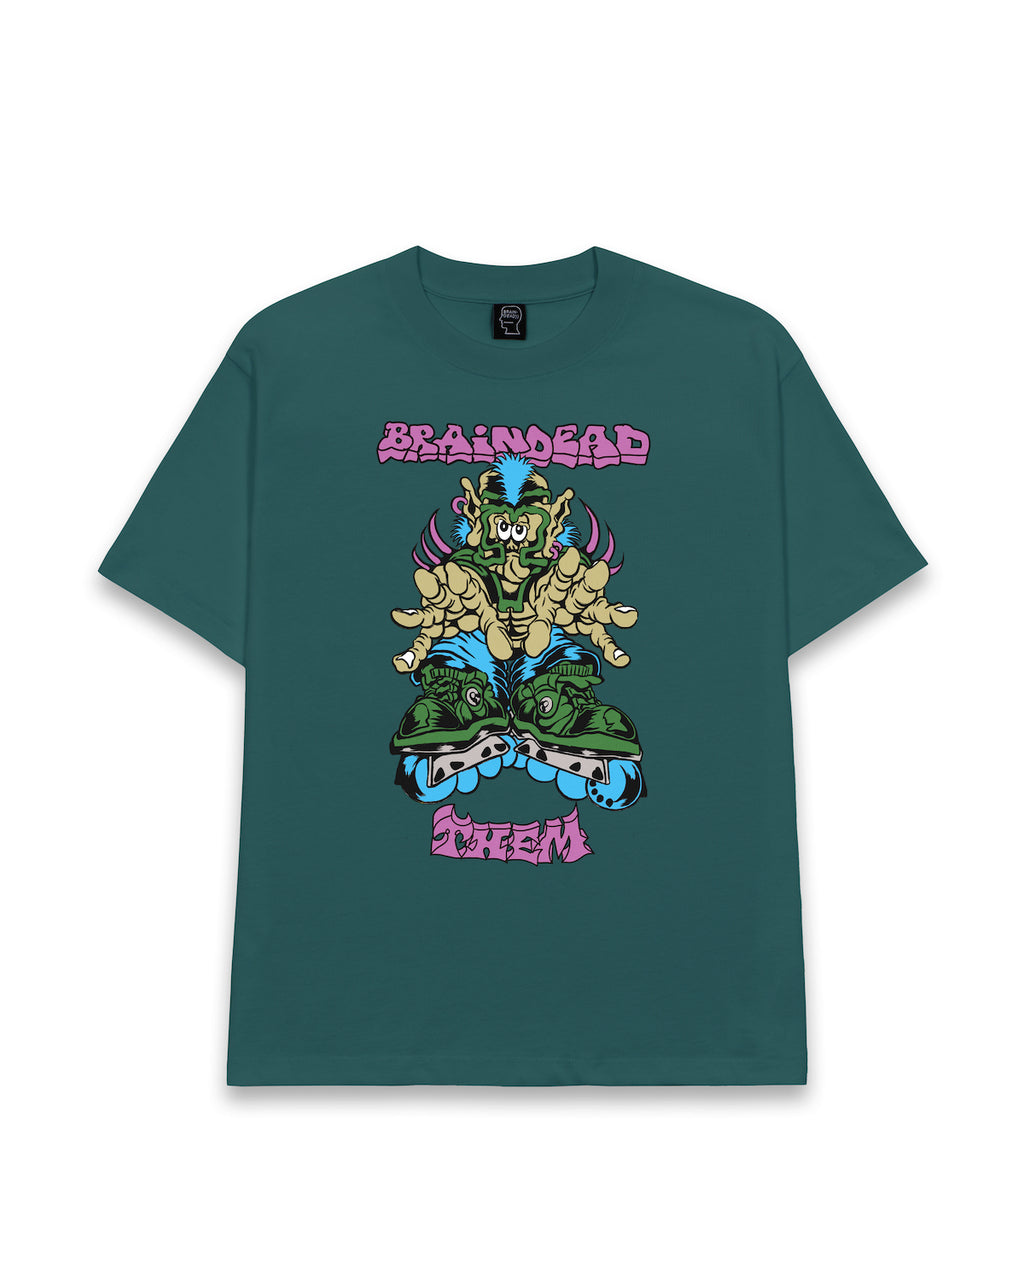 Brain Dead x Them Skates Kogan Big Guy T-shirt - Forest Green